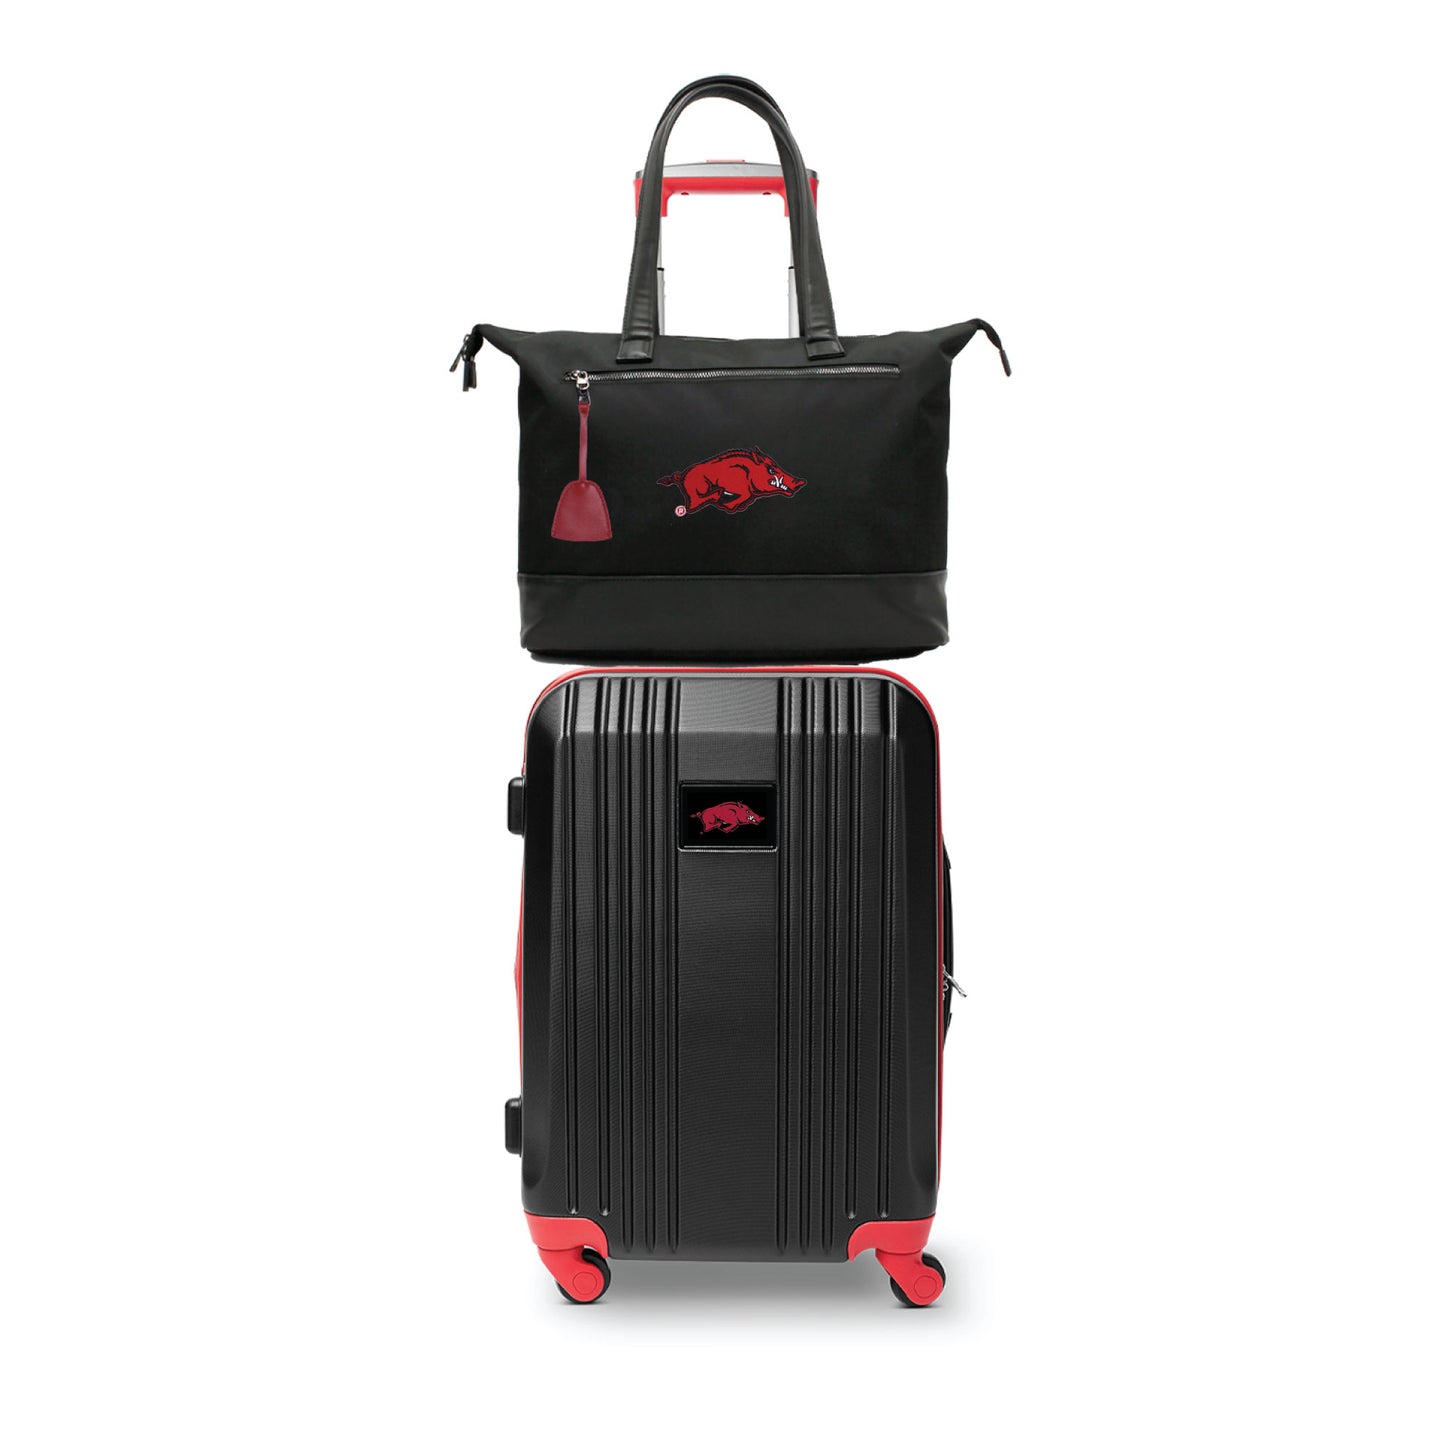 Arkansas Razorbacks Premium Laptop Tote Bag and Luggage Set